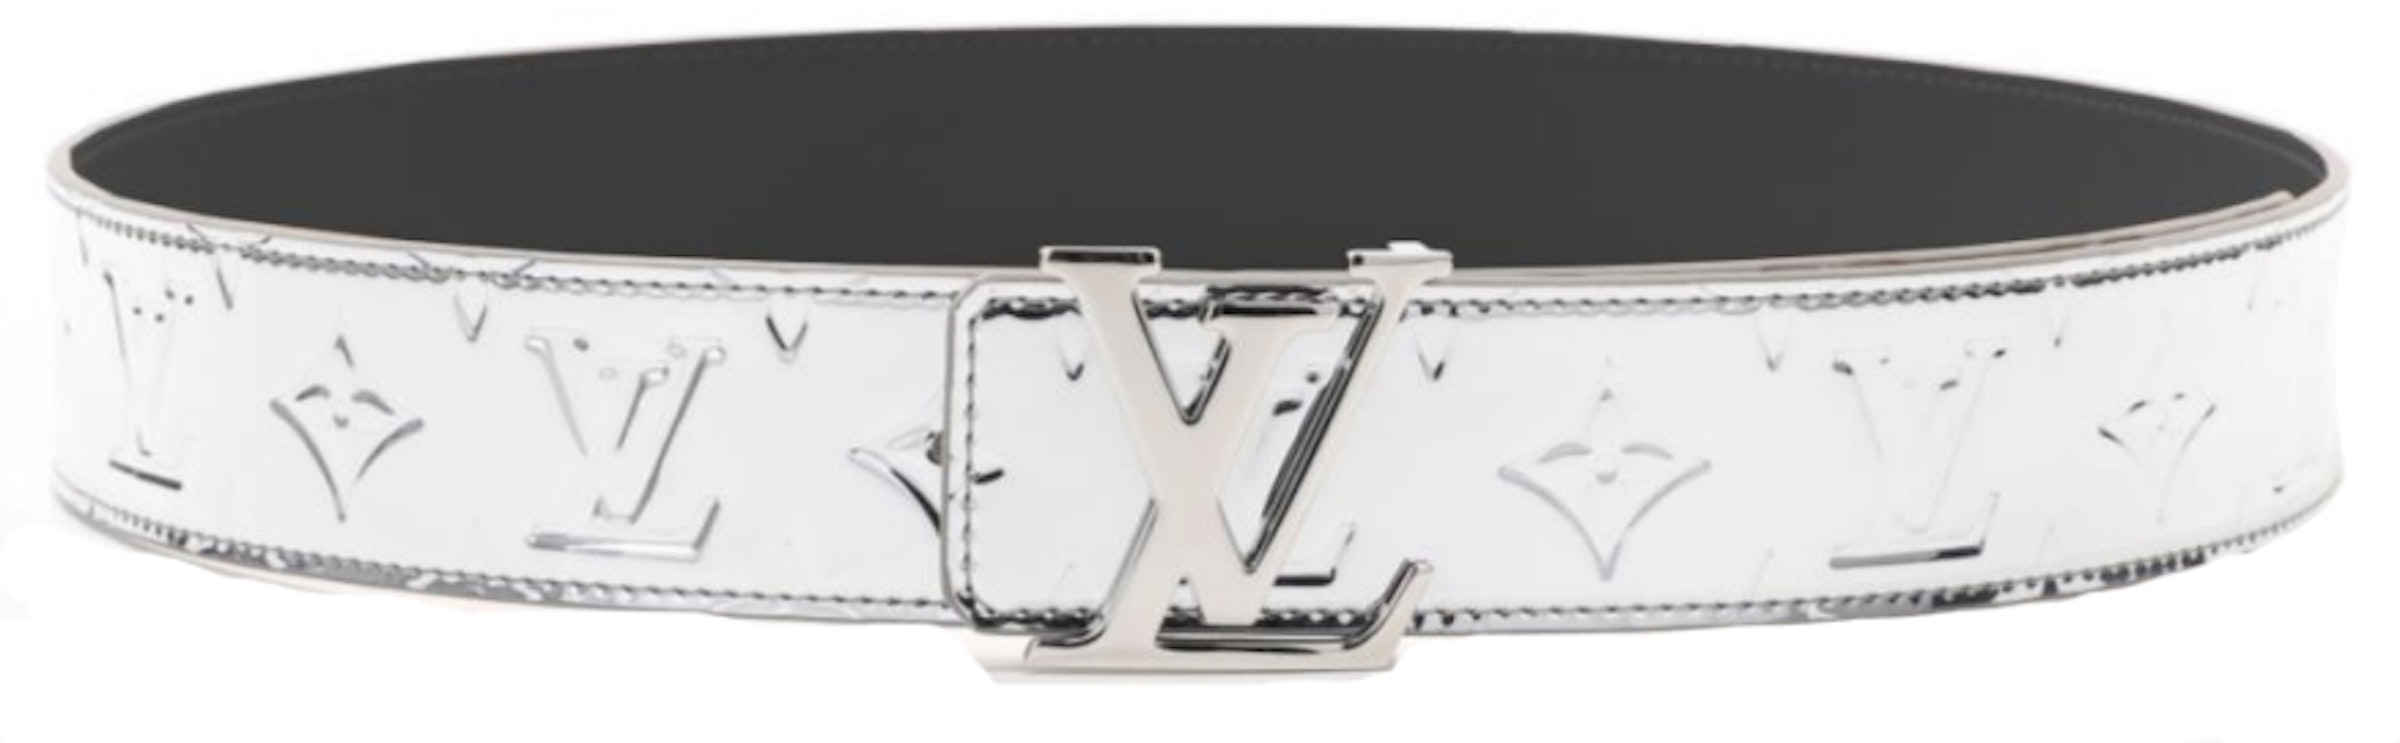 Louis Vuitton x Nigo Denim 40mm Reversible Belt White in Leather - US